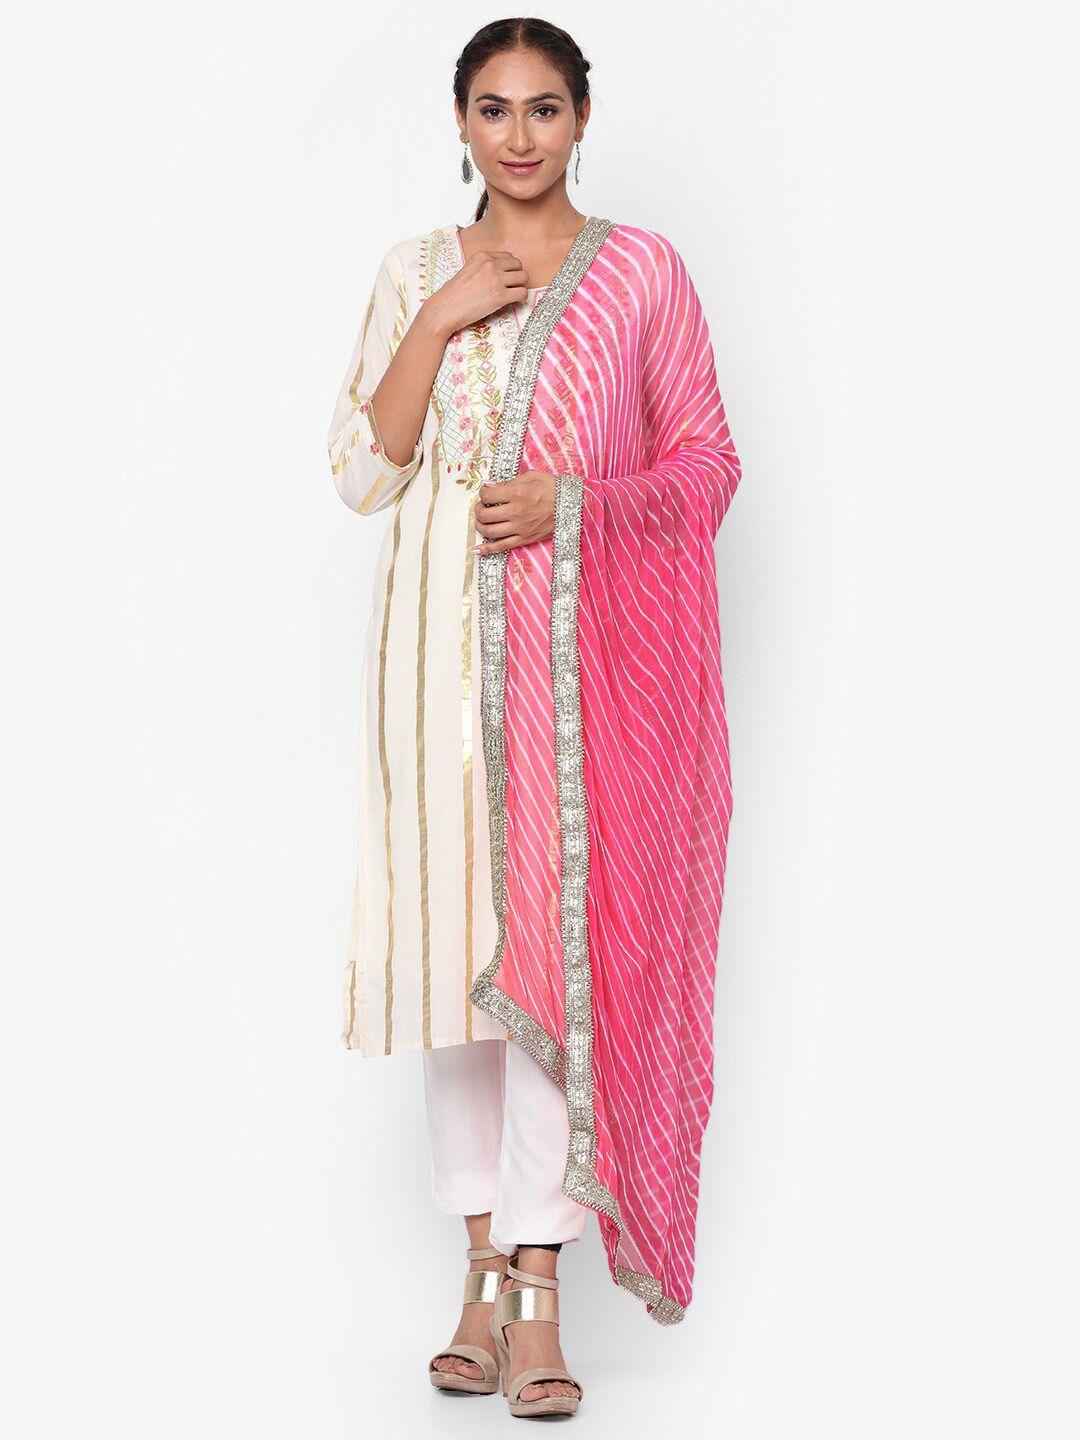 kastiel pink & white striped leheriya with embellished lace dupatta